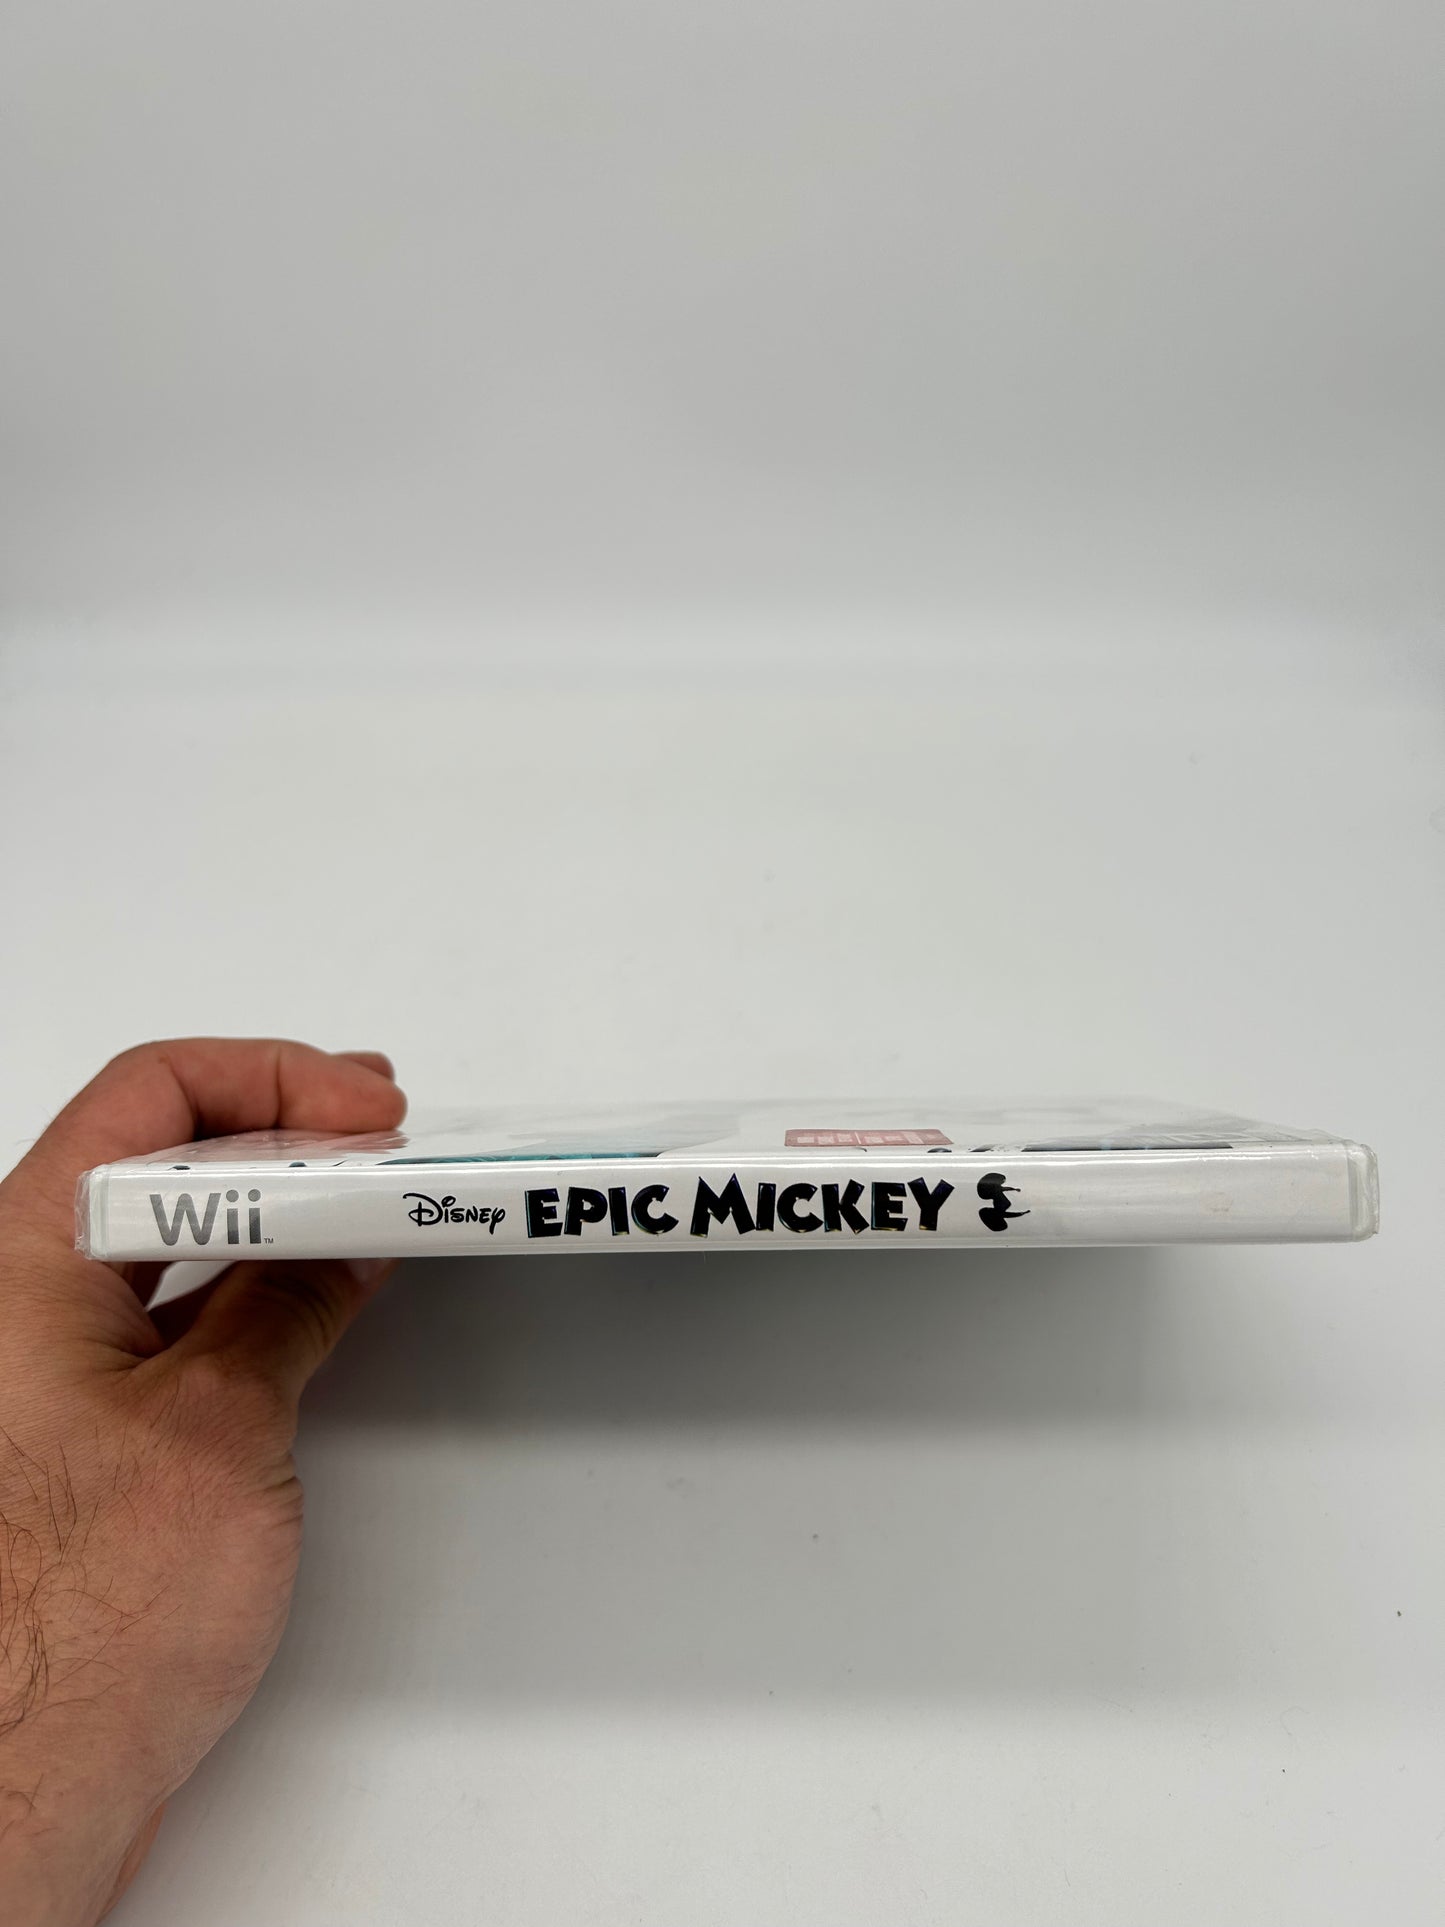 NiNTENDO Wii | EPiC MiCKEY